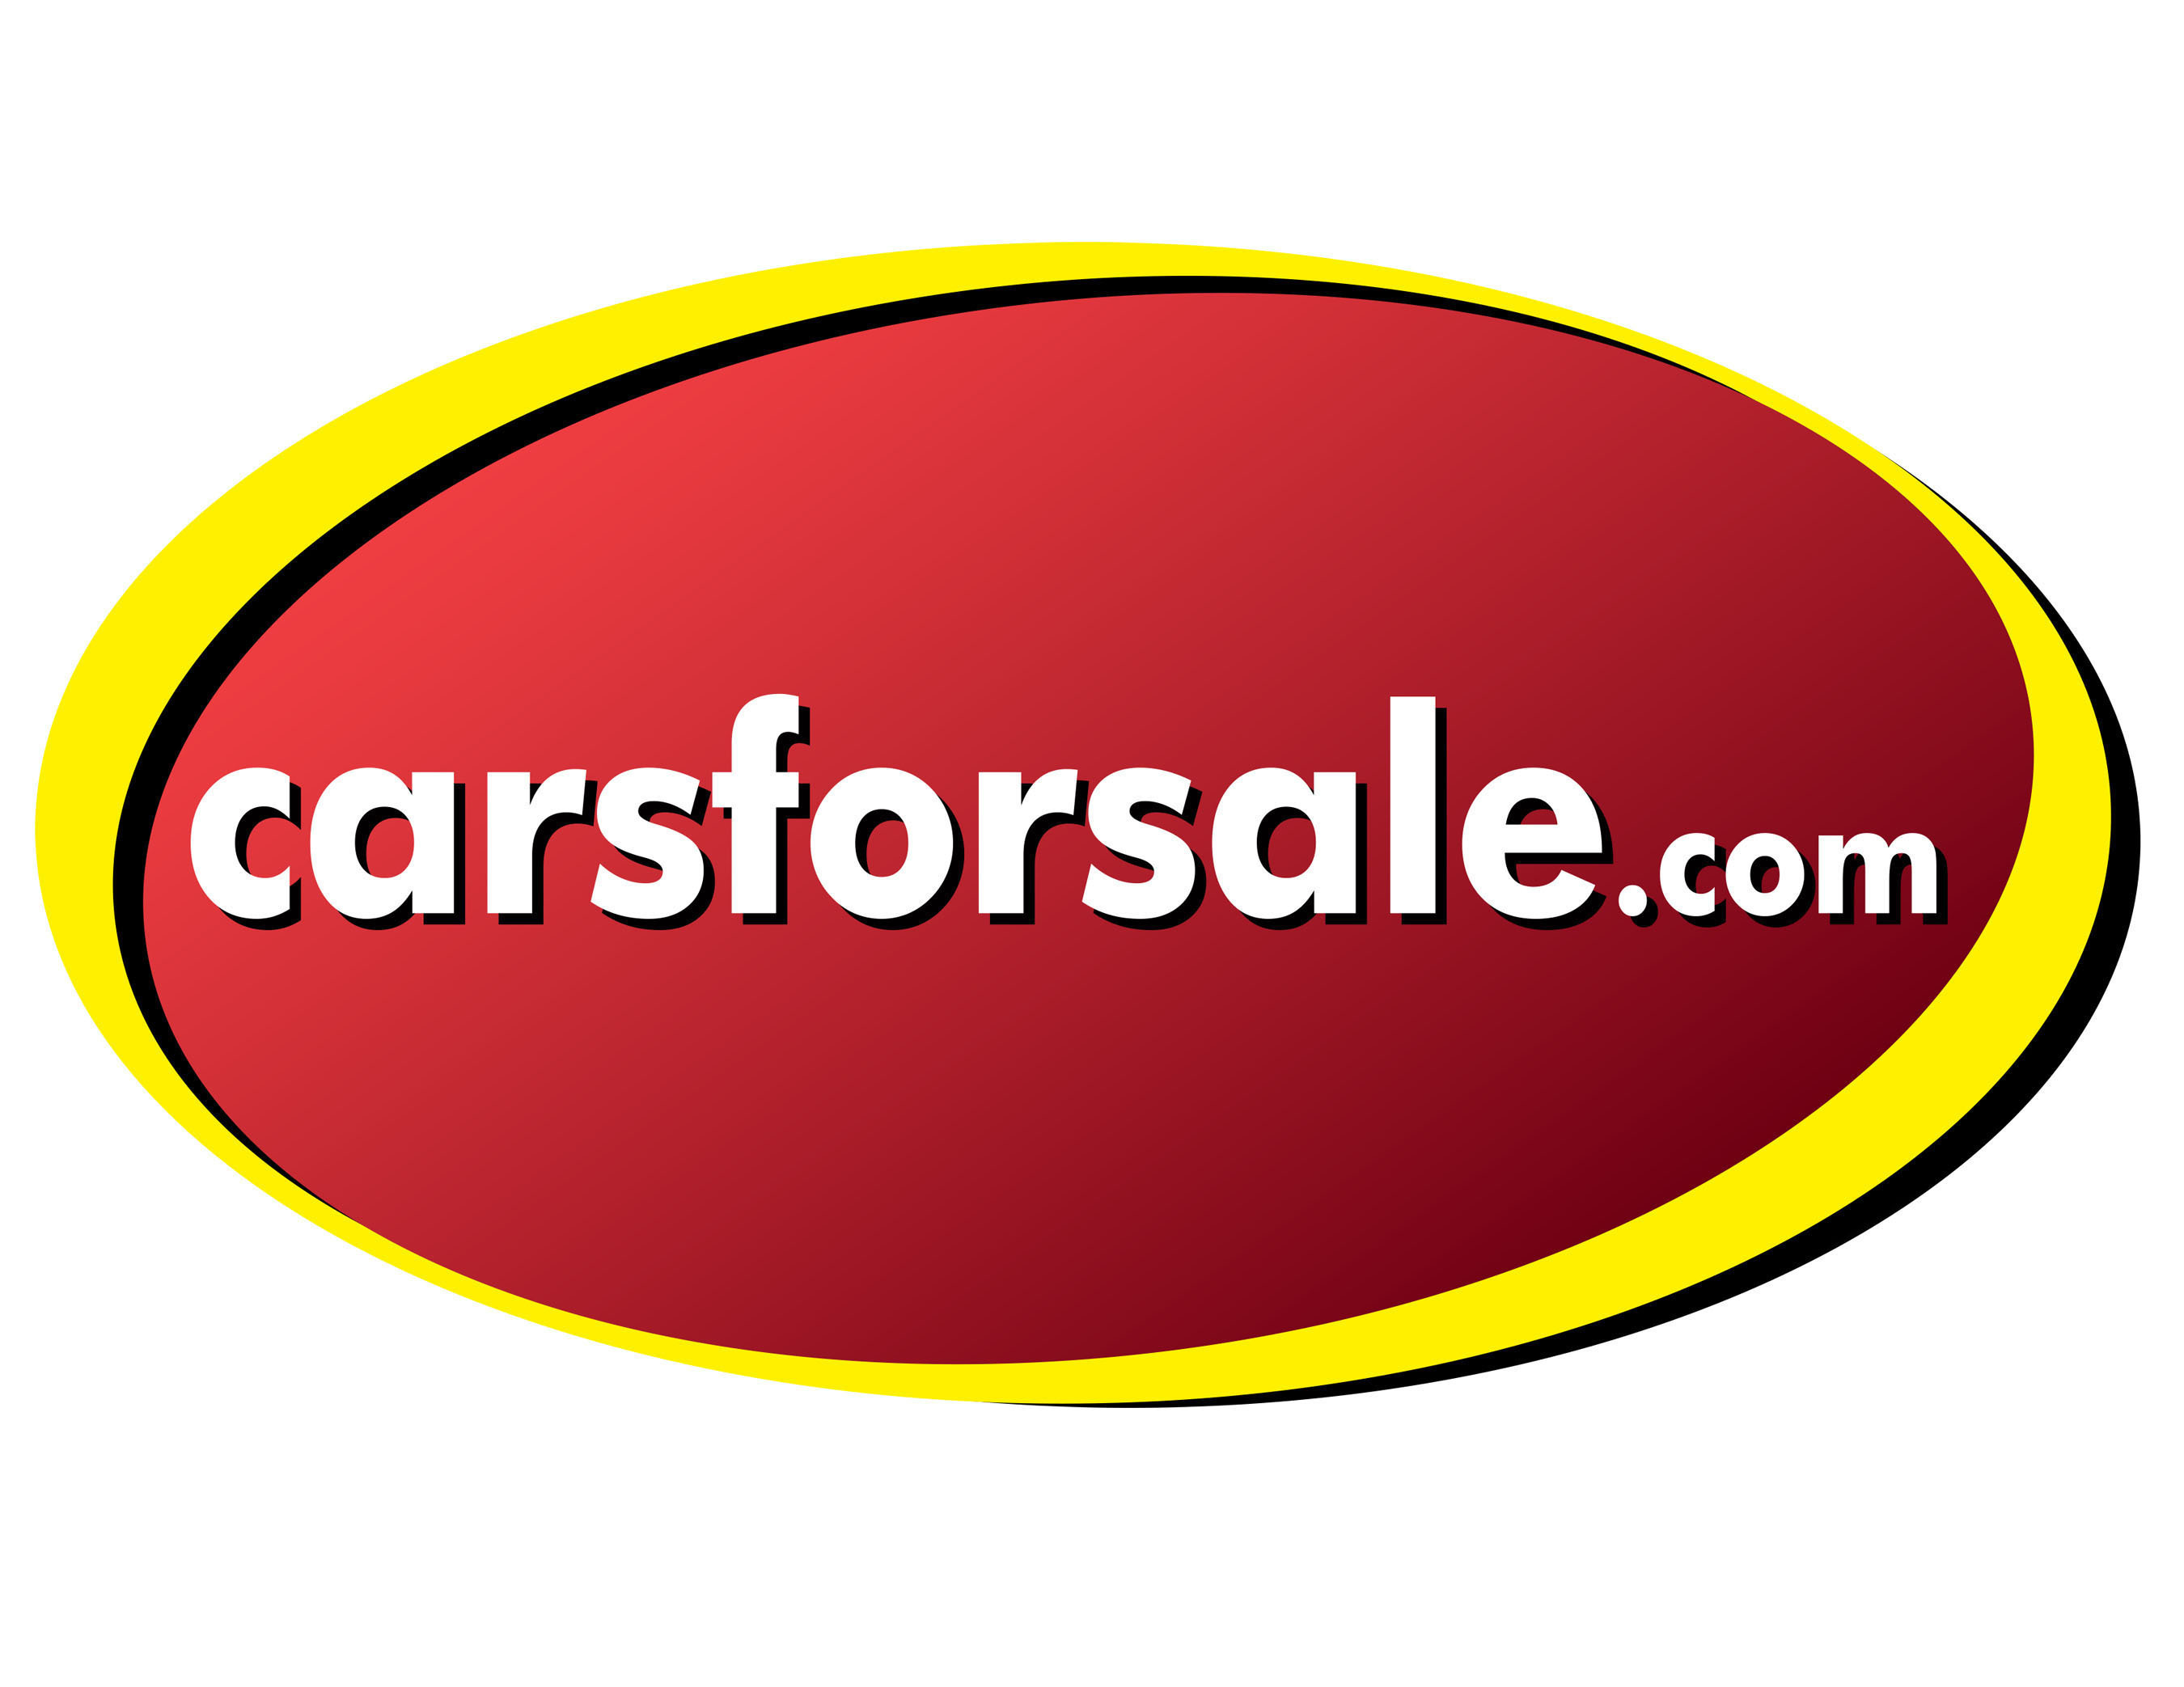 Carsforsale.com Logo. (PRNewsFoto/Carsforsale.com) (PRNewsFoto/CARSFORSALE.COM)